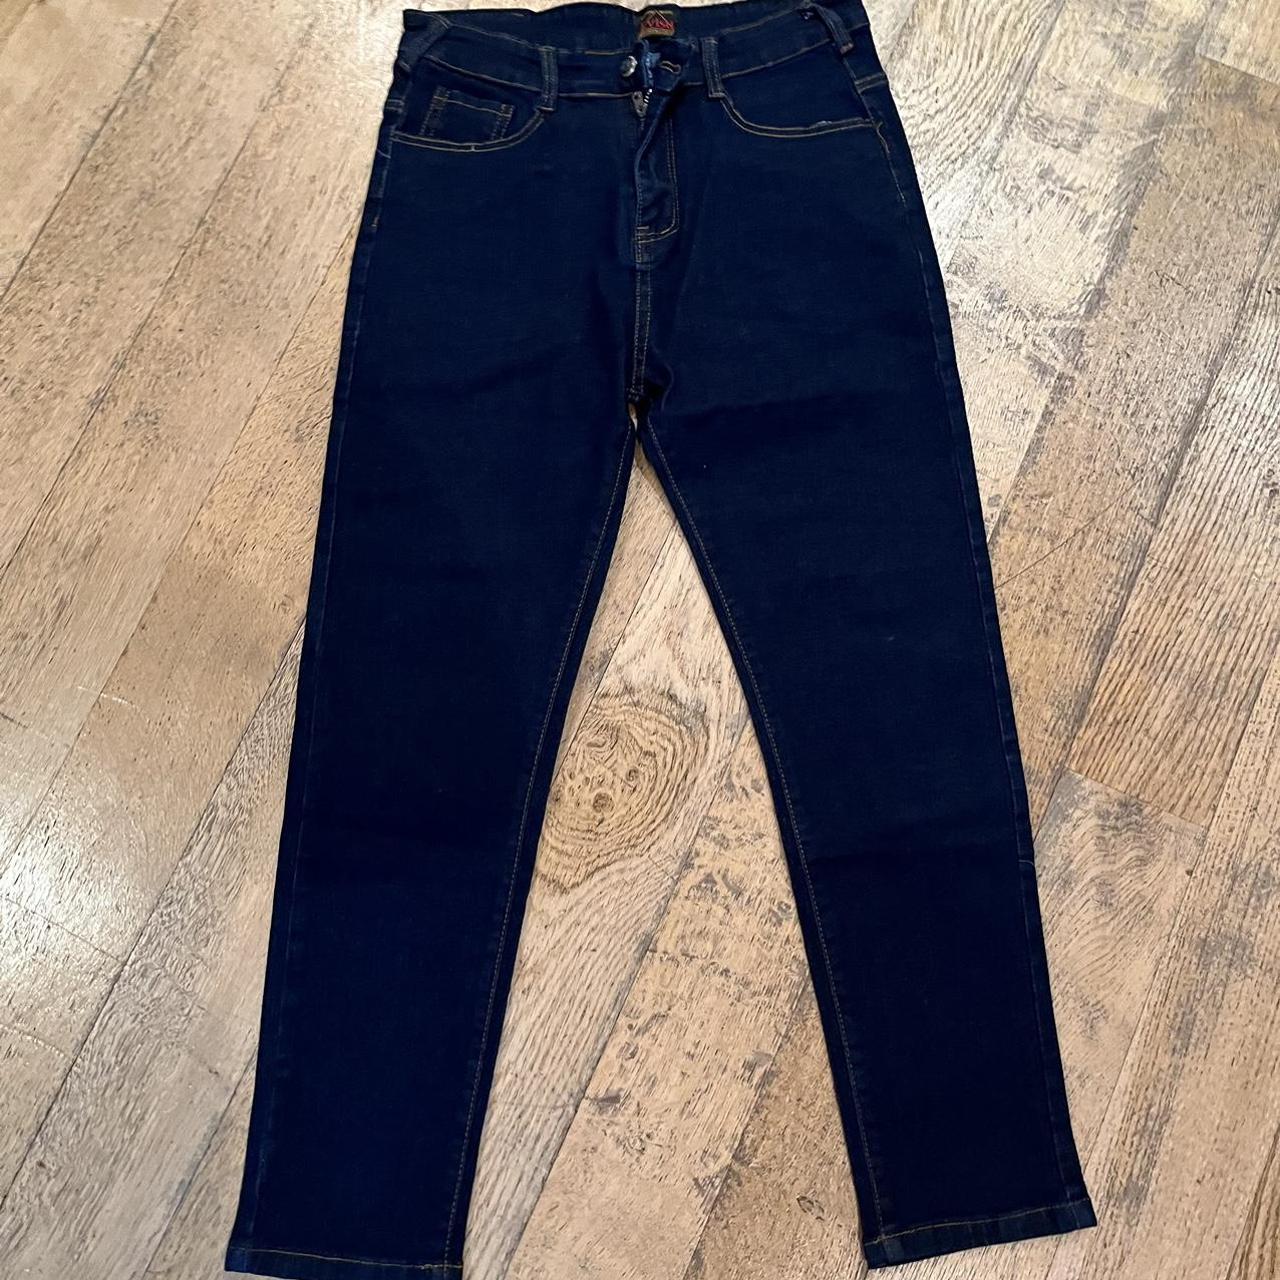 Taylord Evisu jeans Size: 30’ waist (S) Next day... - Depop